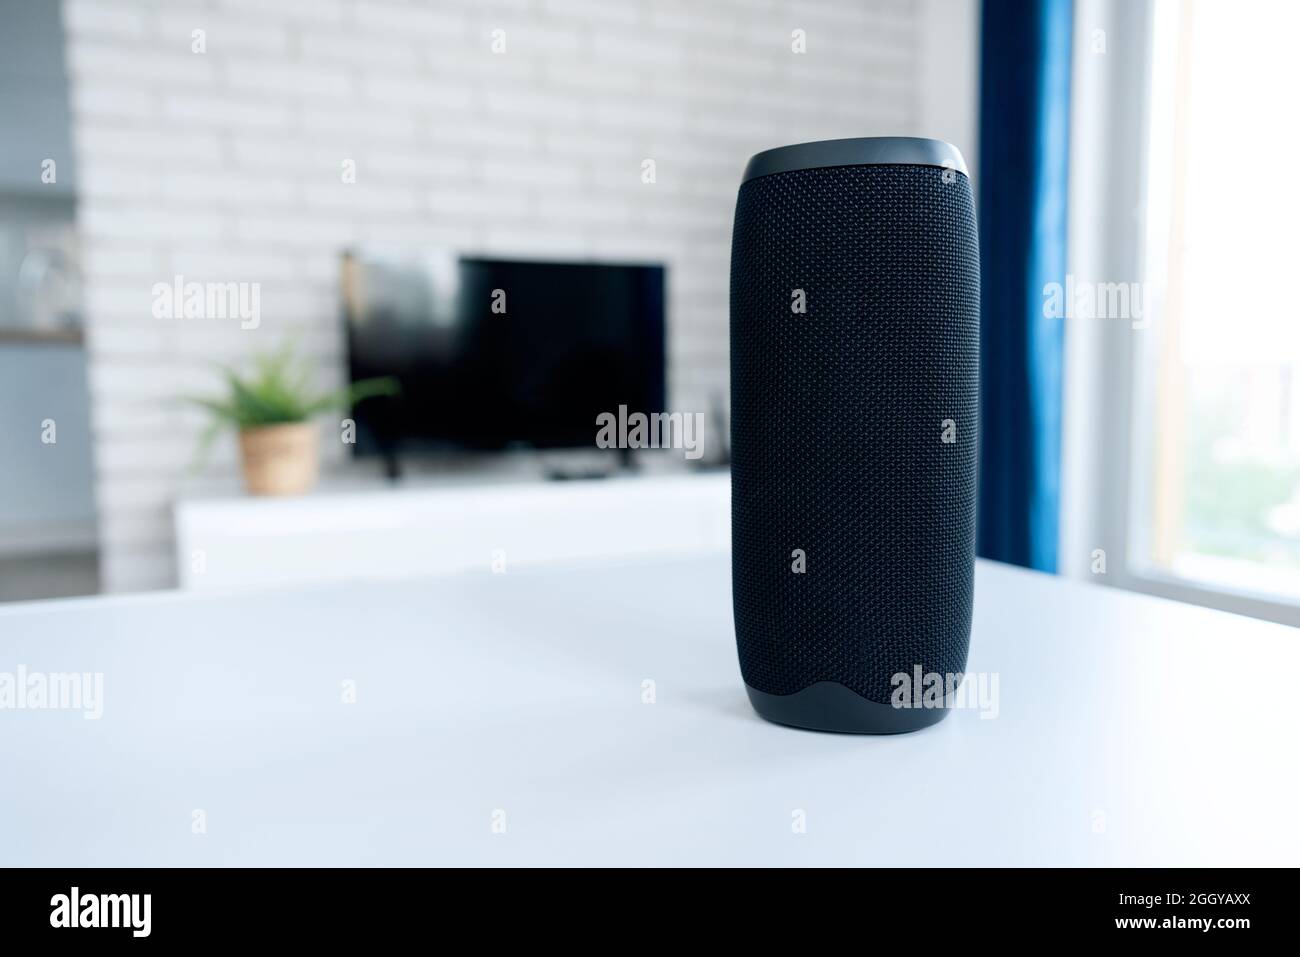 Intelligent assistant, smart speaker device. Smart home concept Stock Photo